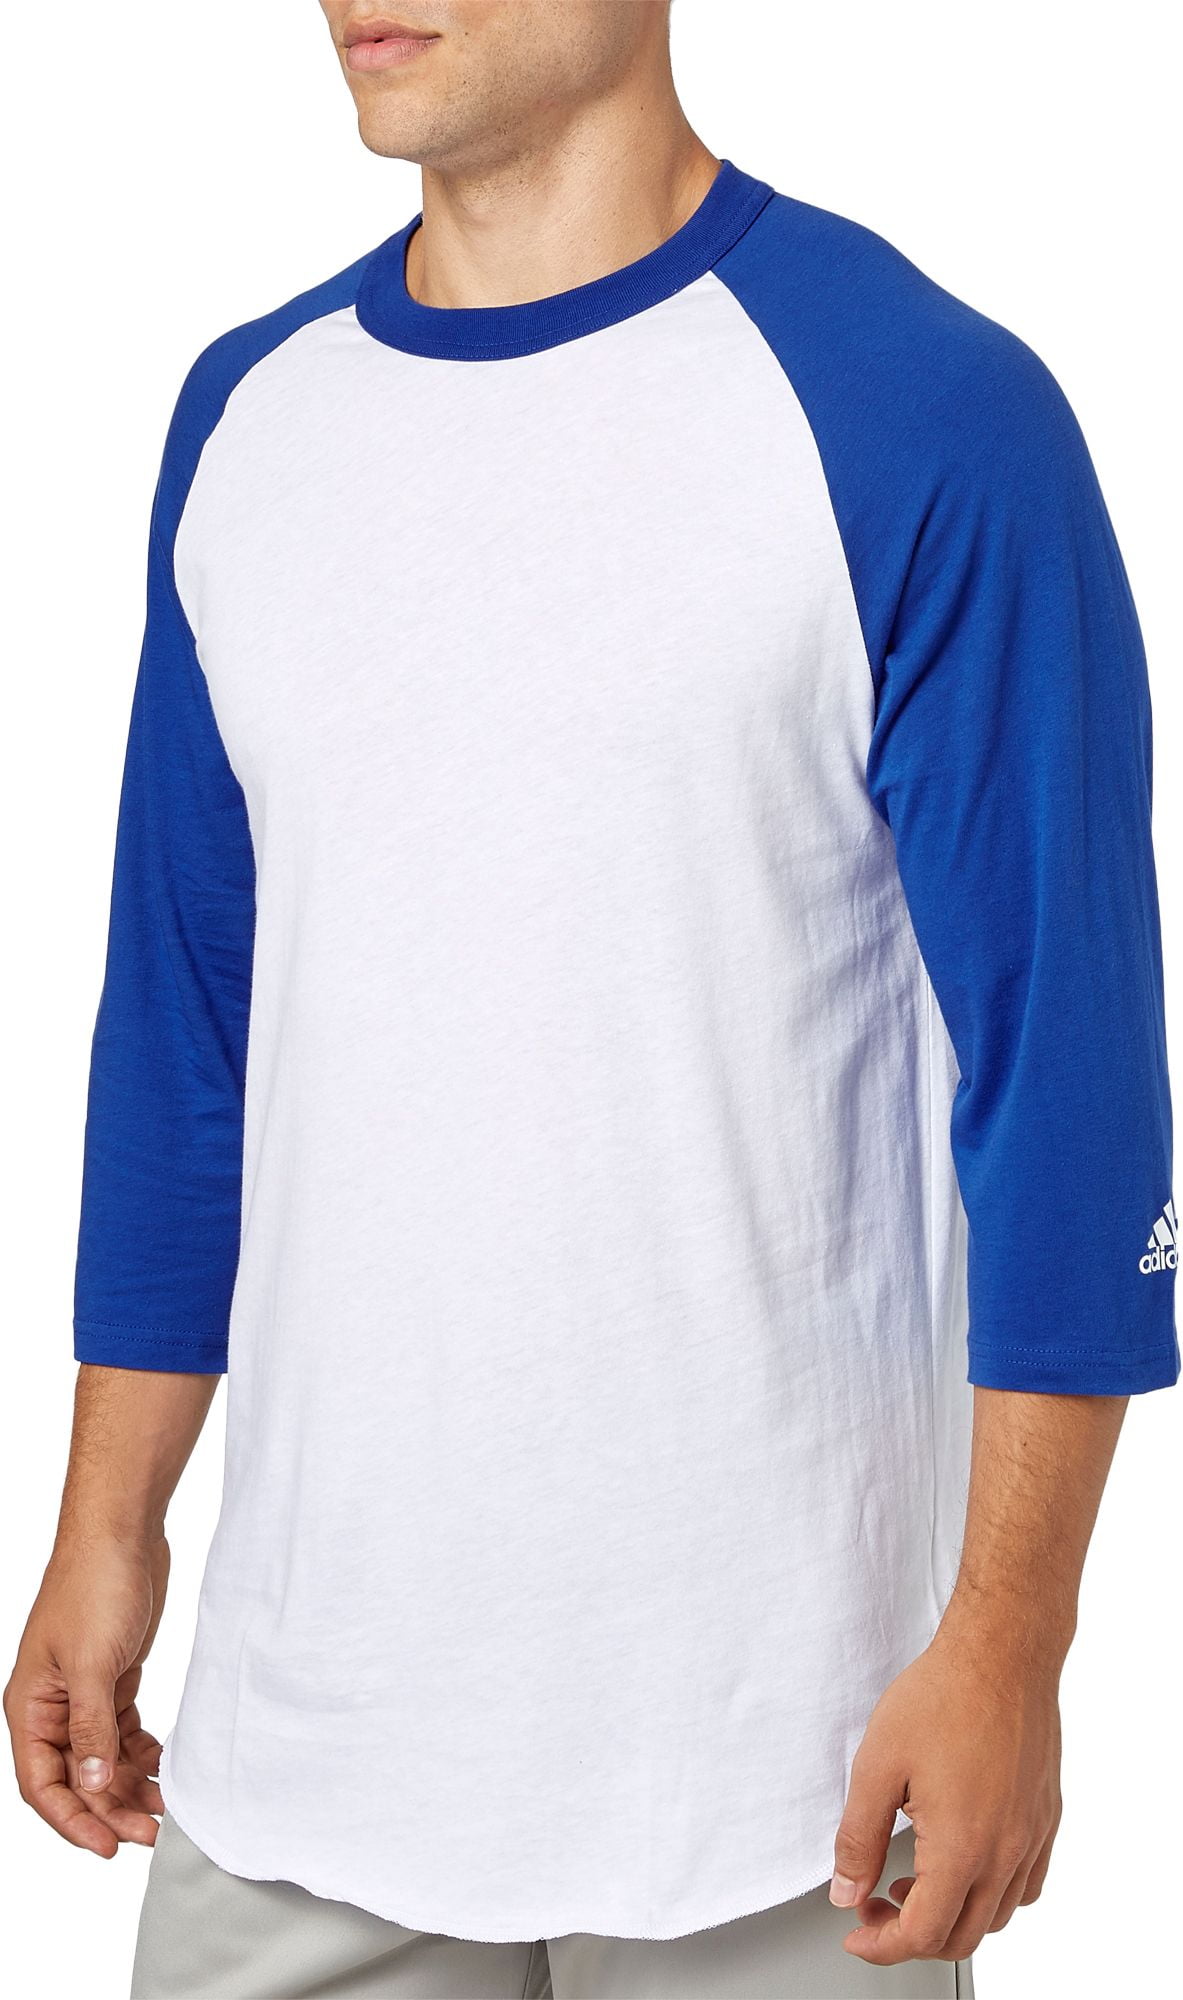 Adidas - adidas Adult Triple Stripe Â¾ Sleeve Baseball Practice Shirt ...